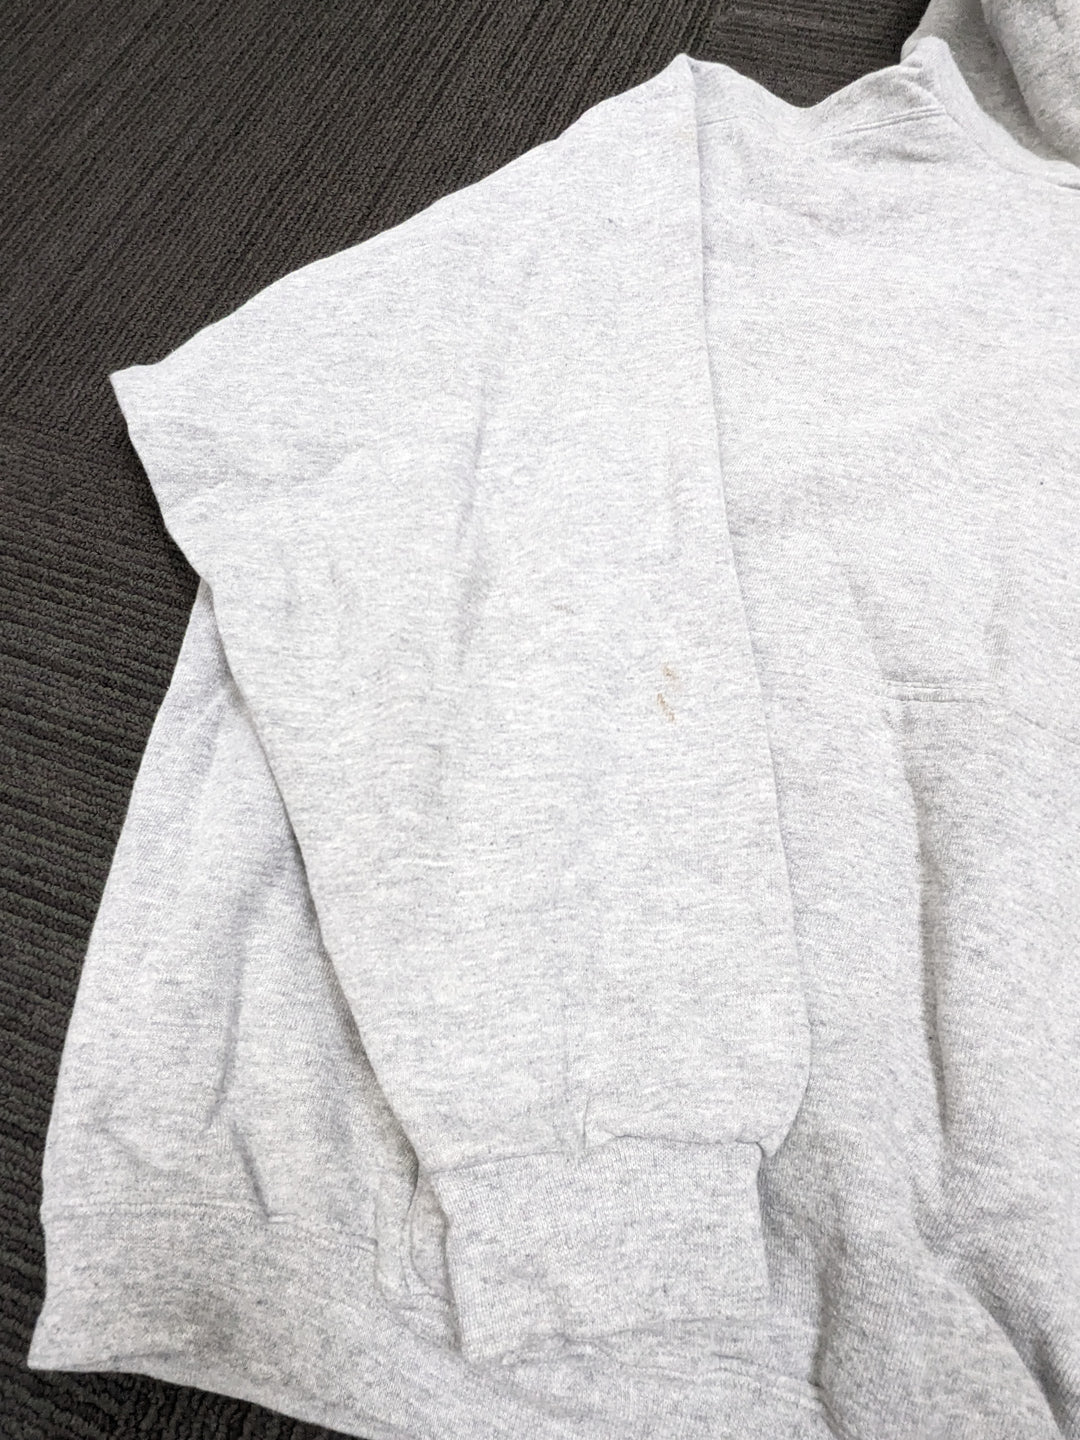 Nike Sweatshirt 1 pc 3.8 lbs C0111710-05 - Raghouse